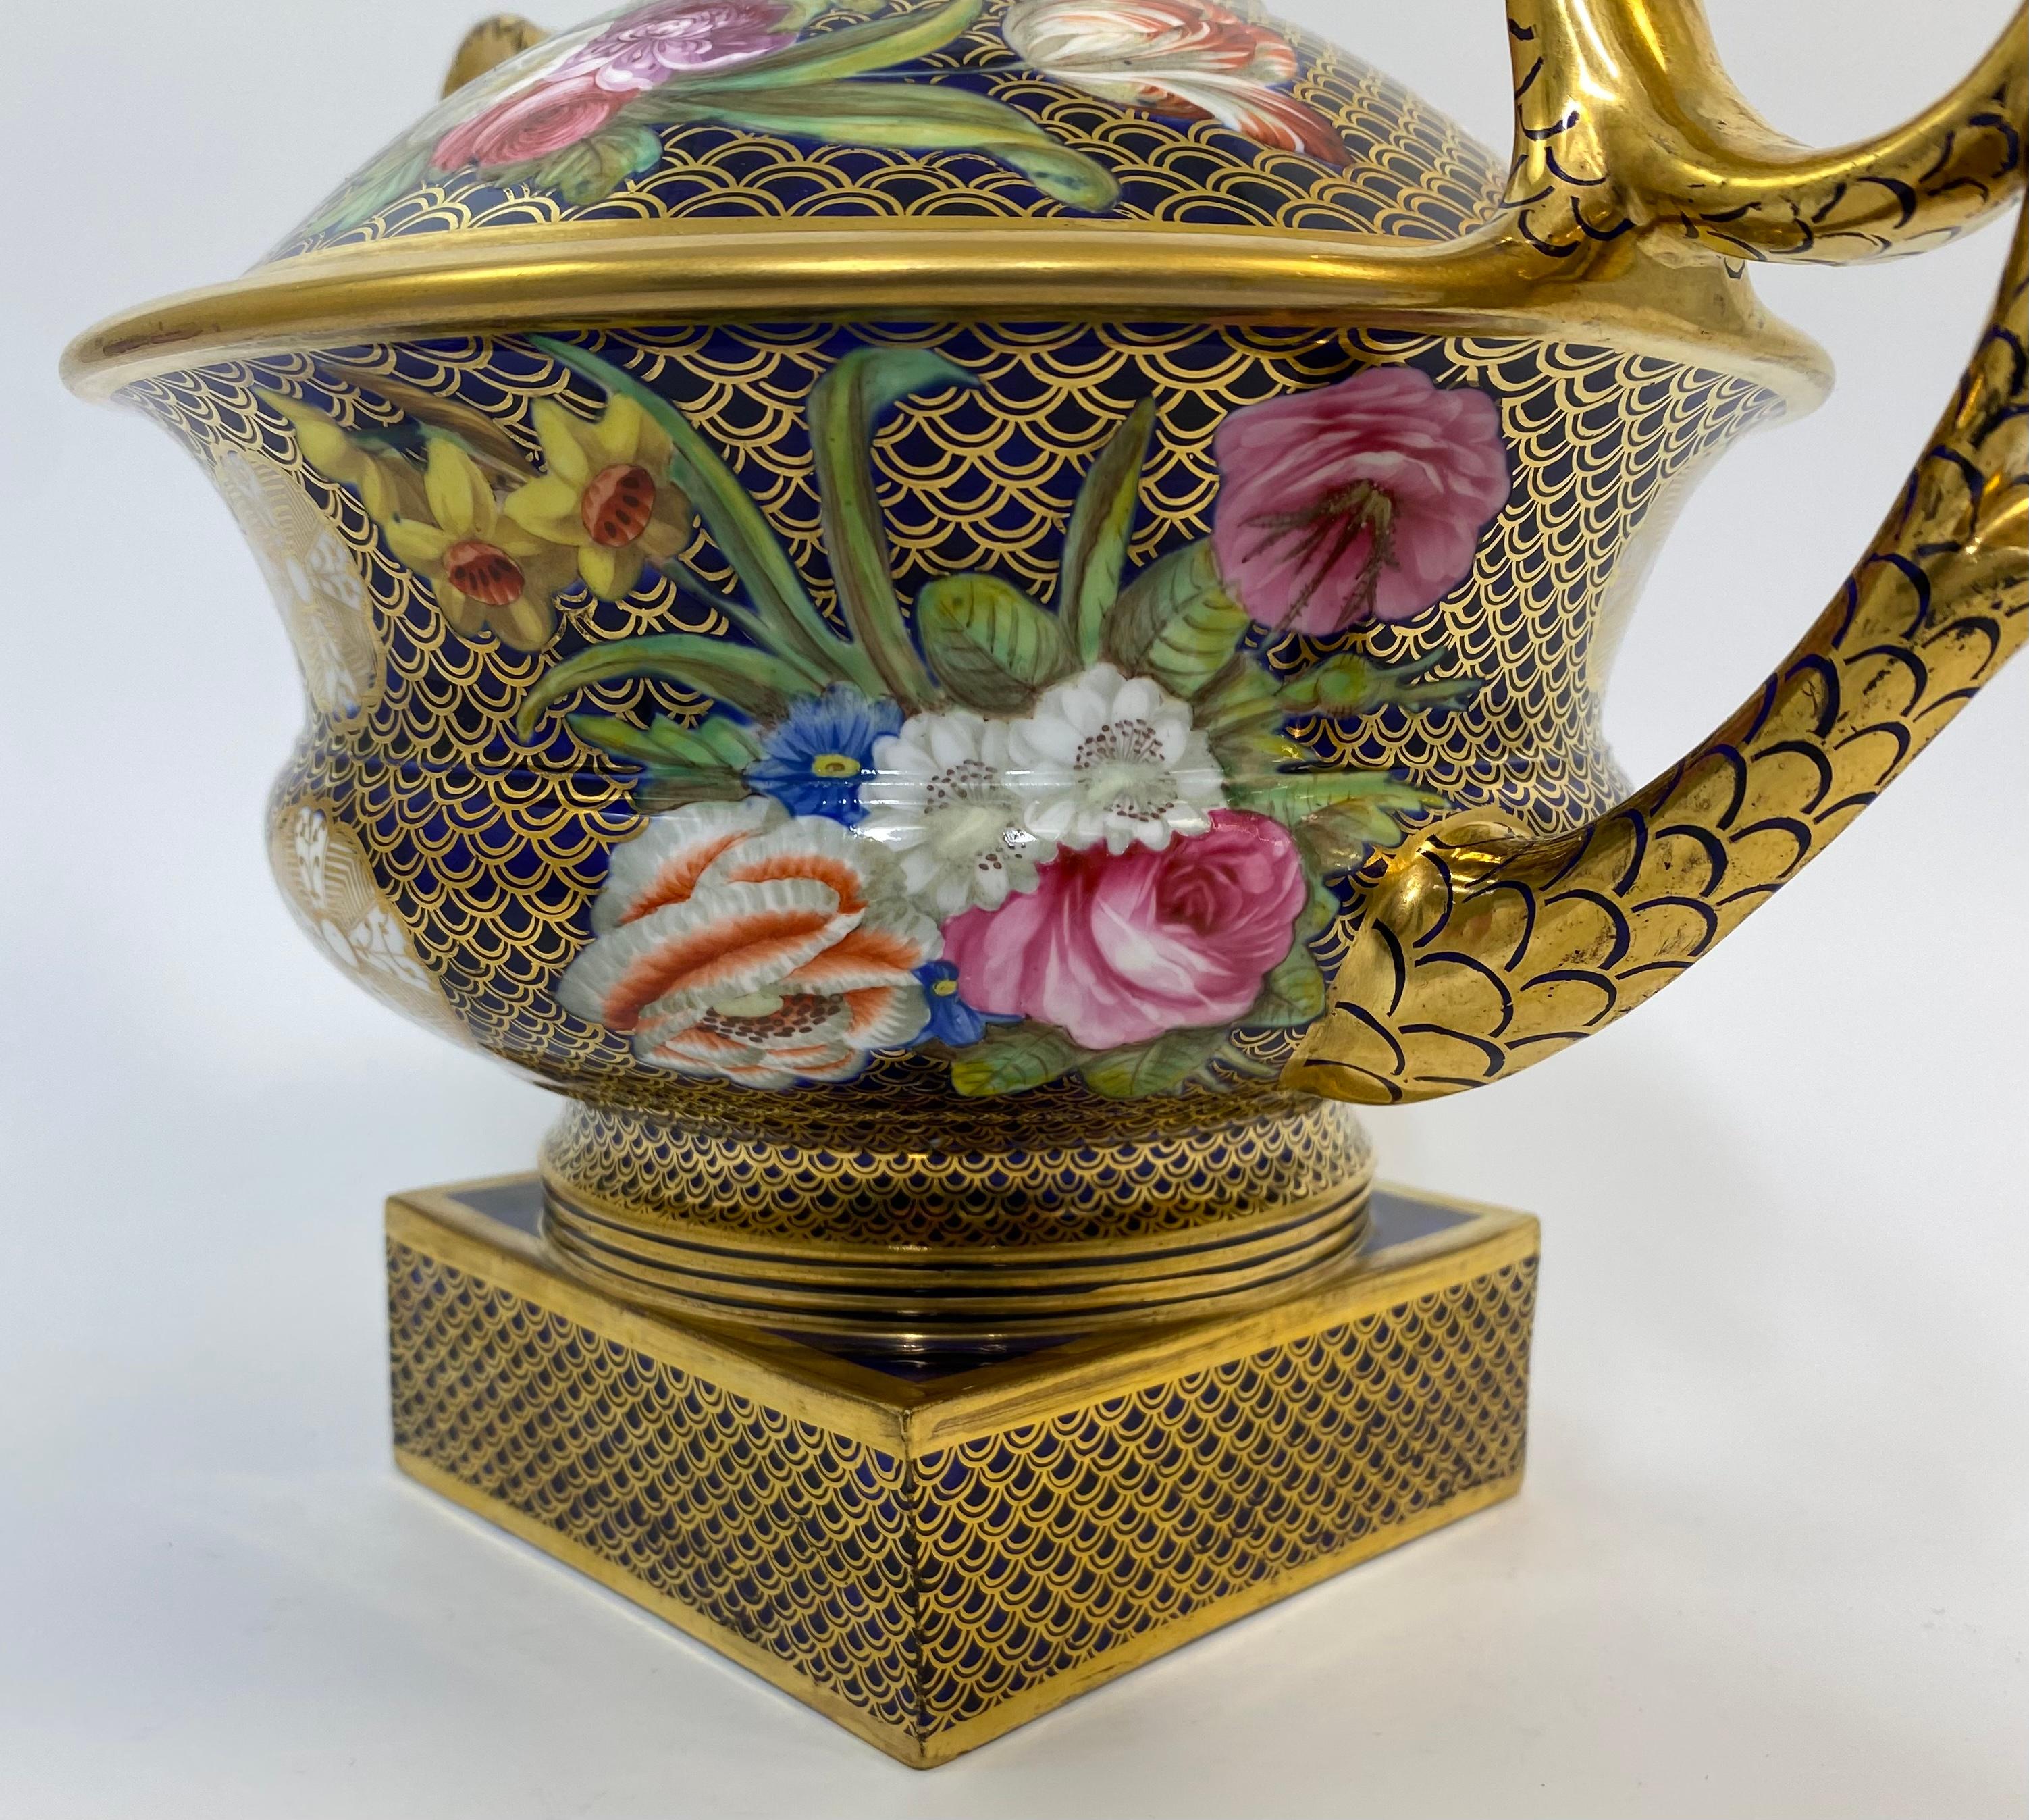 Spode porcelain pot pourri and cover, ‘1166’ pattern, c. 1820. 3